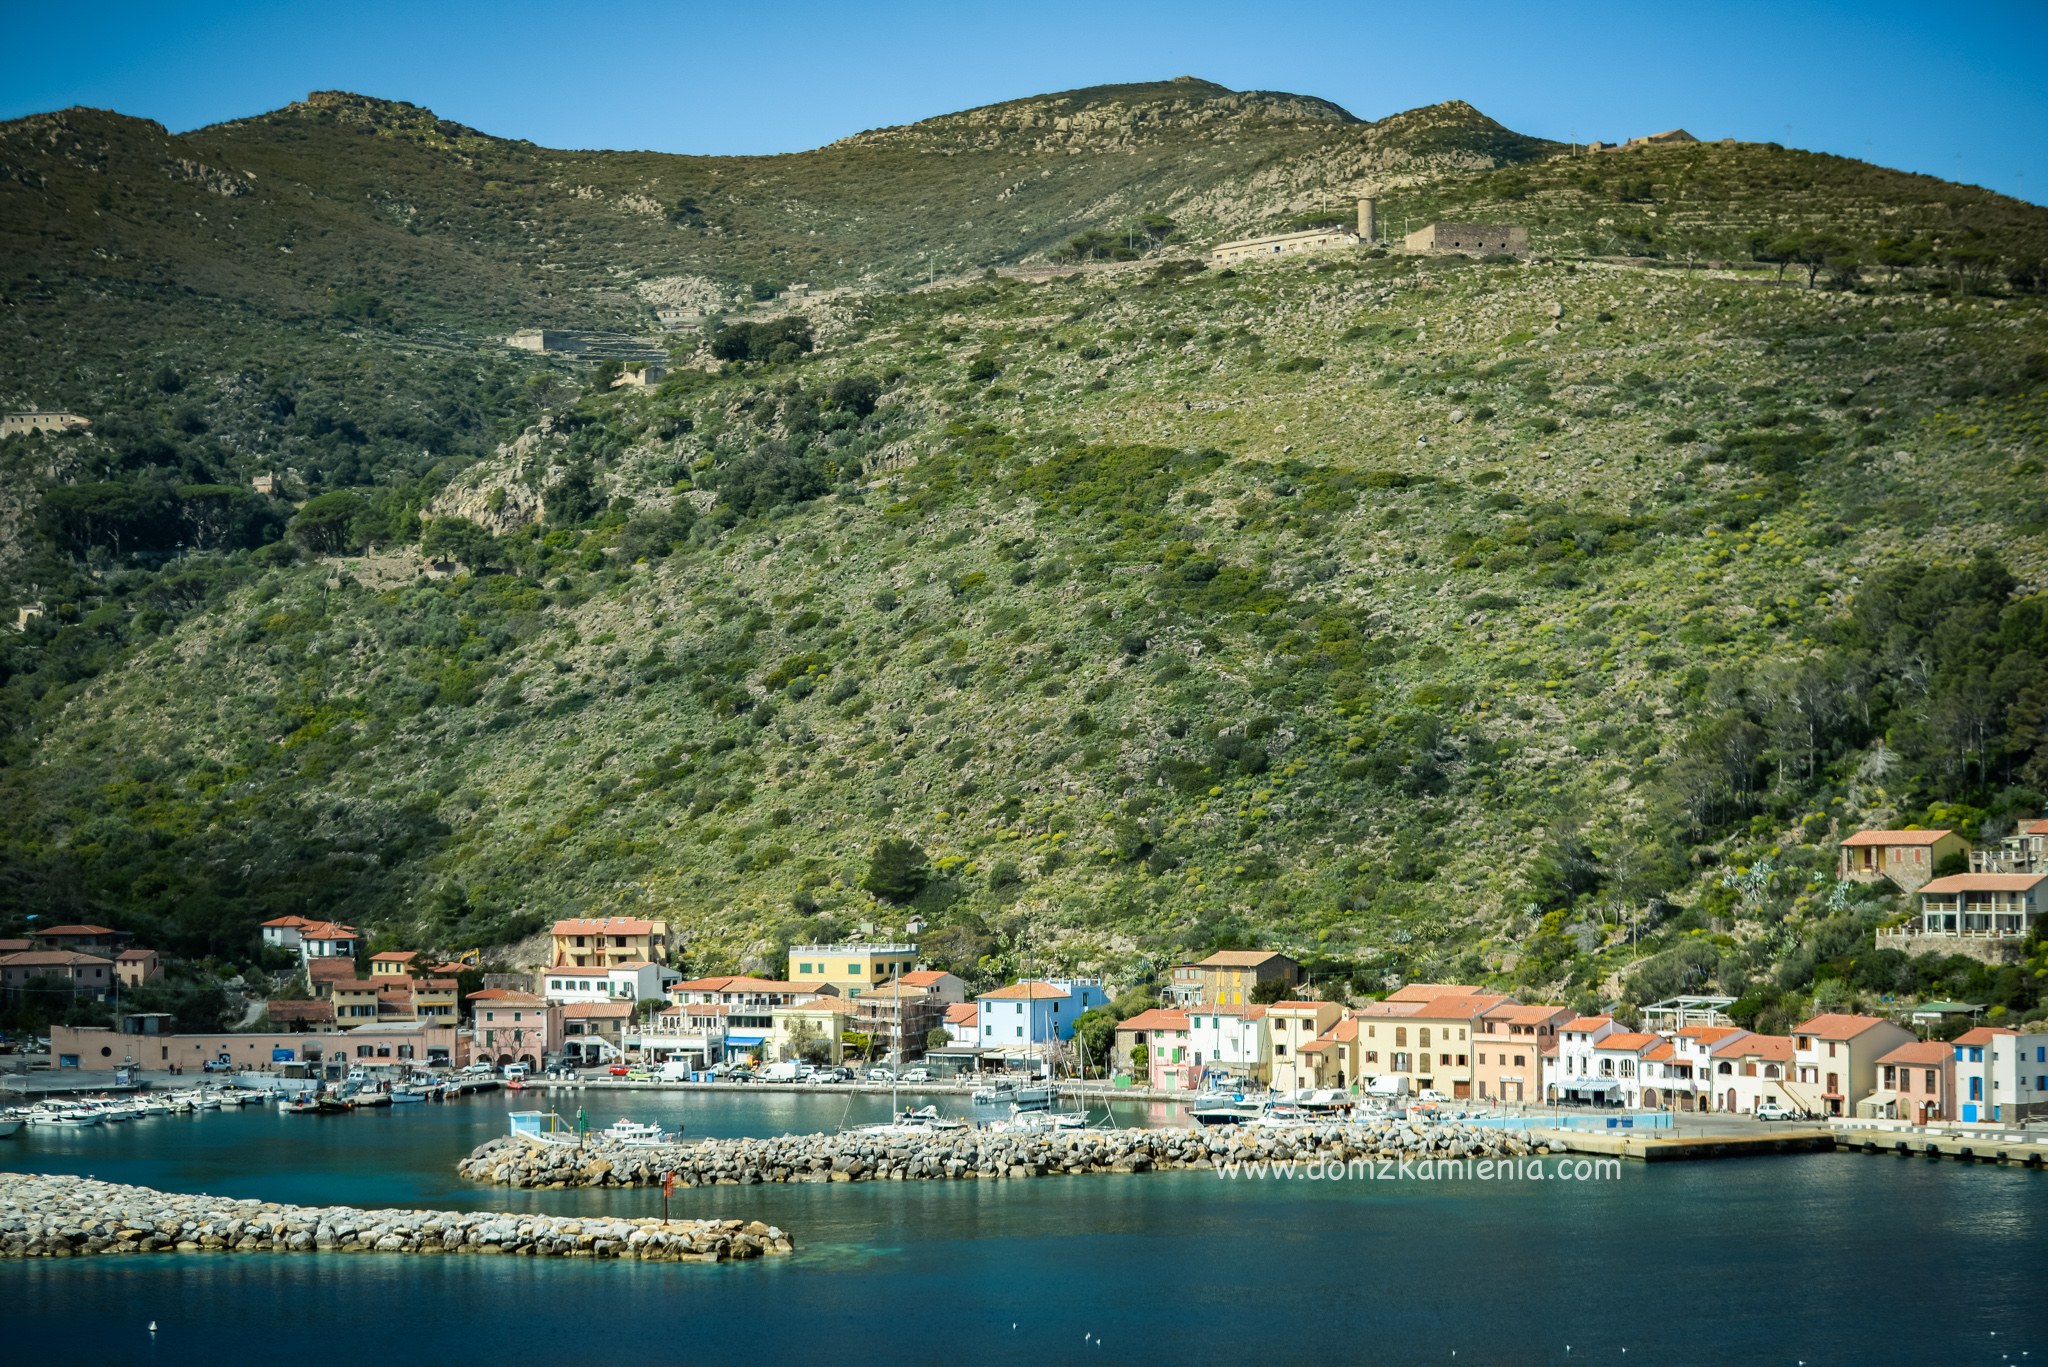 Capraia - Trekking archipelag Toskanii Dom z Kamienia blog